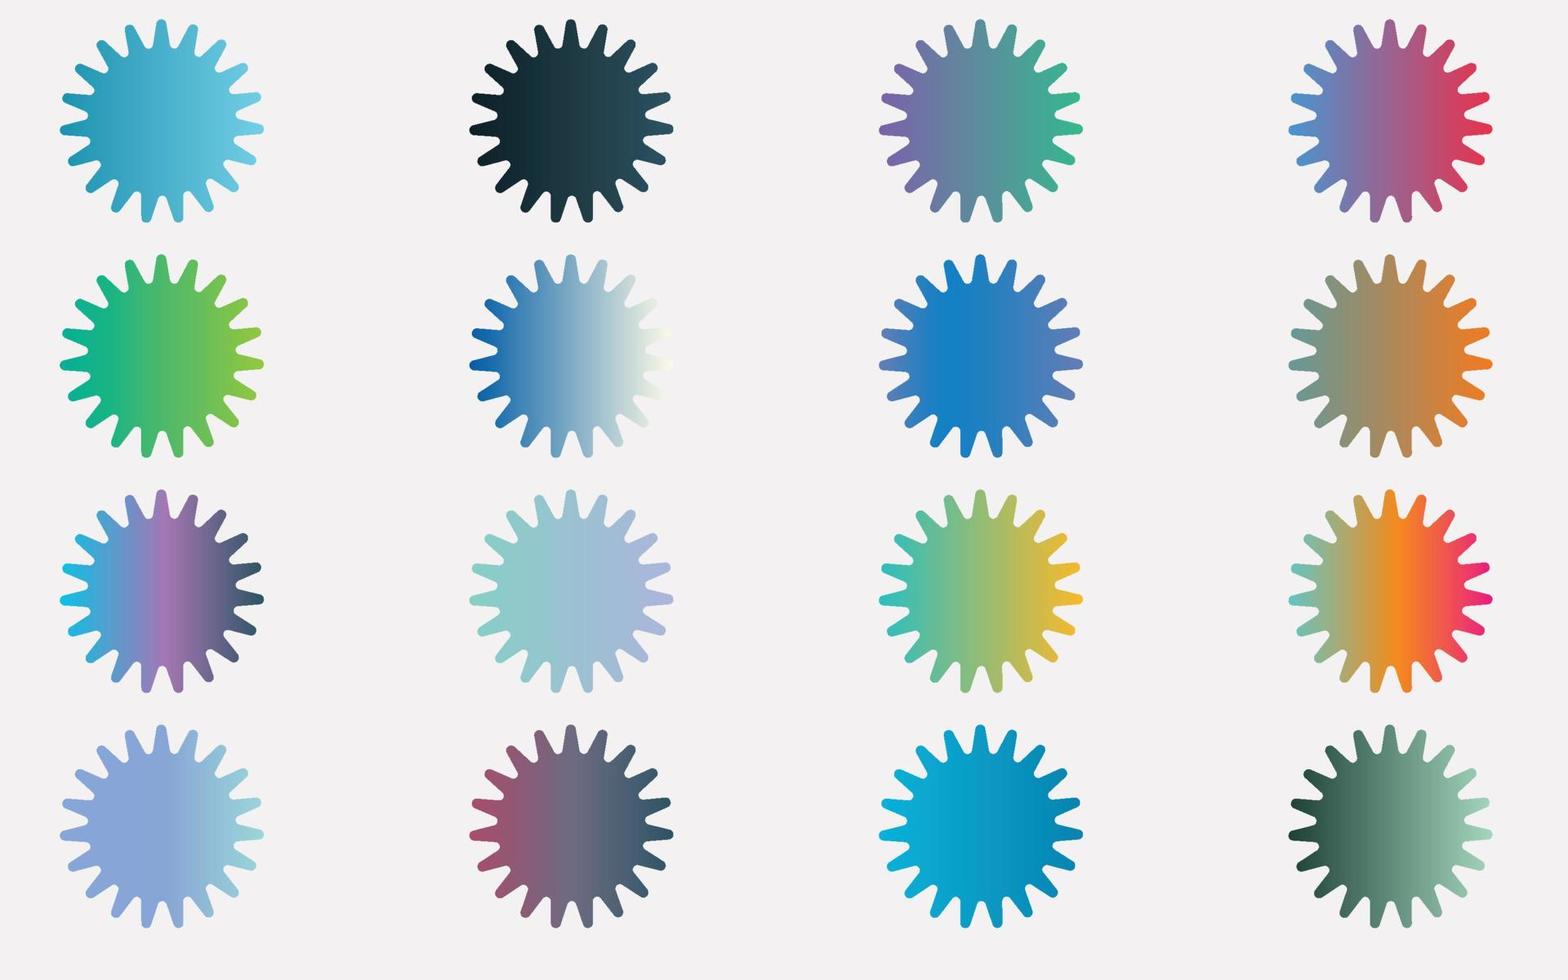 Mega set of vibrant colorful gradients color background vector